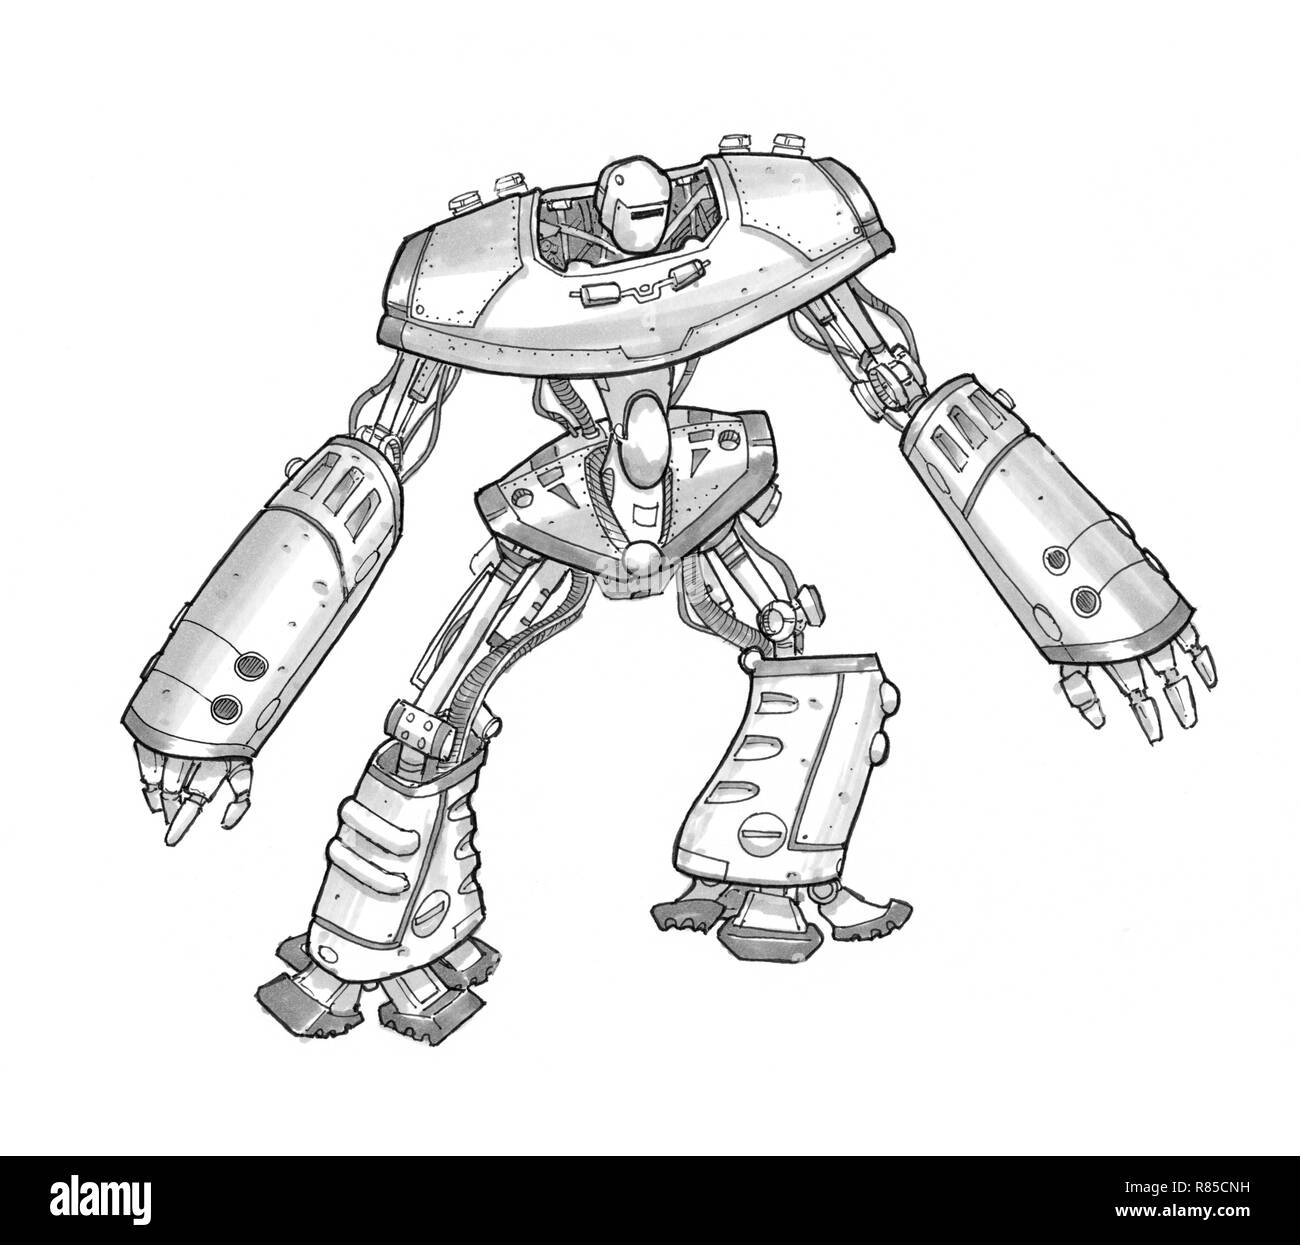 Black Grunge Rough Ink Sketch of Robot Stock Photo